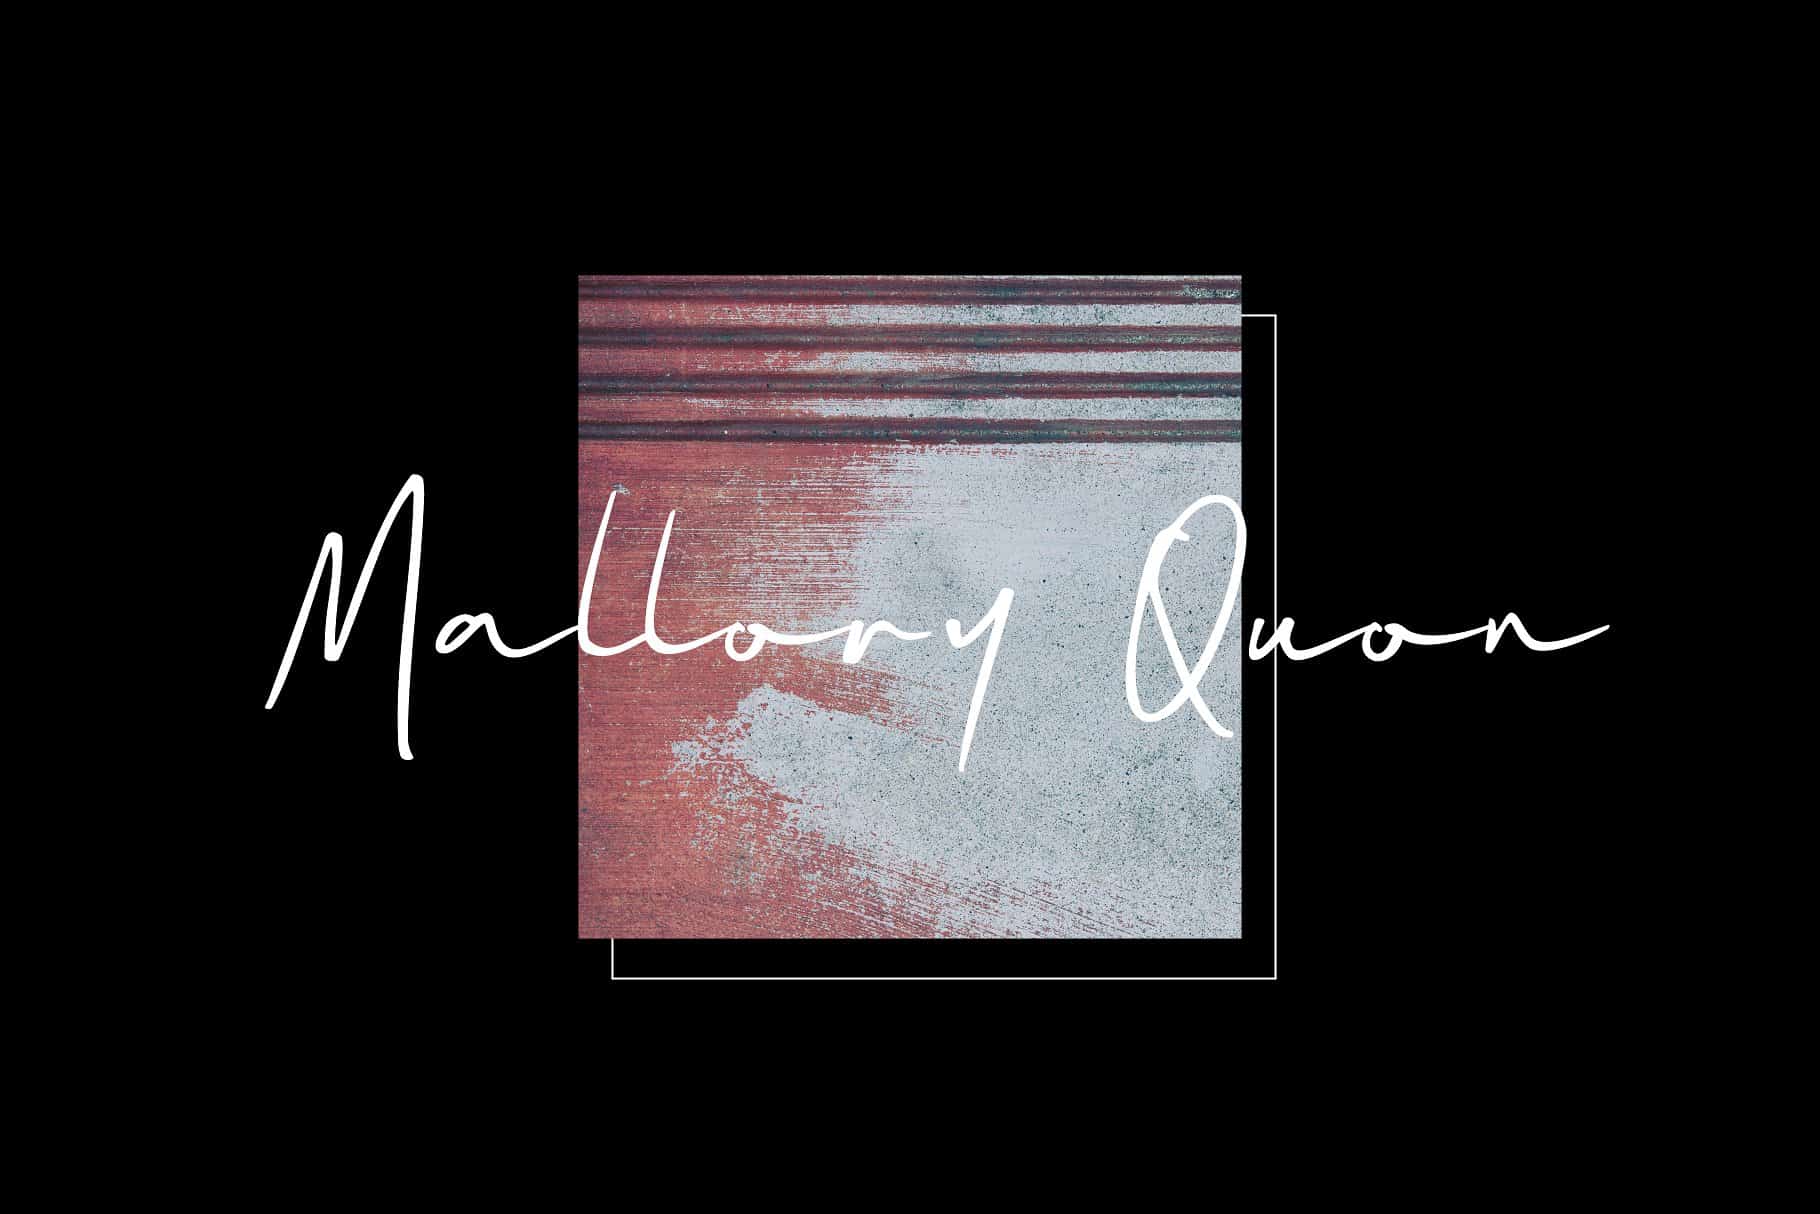 Mallory Quon шрифт скачать бесплатно